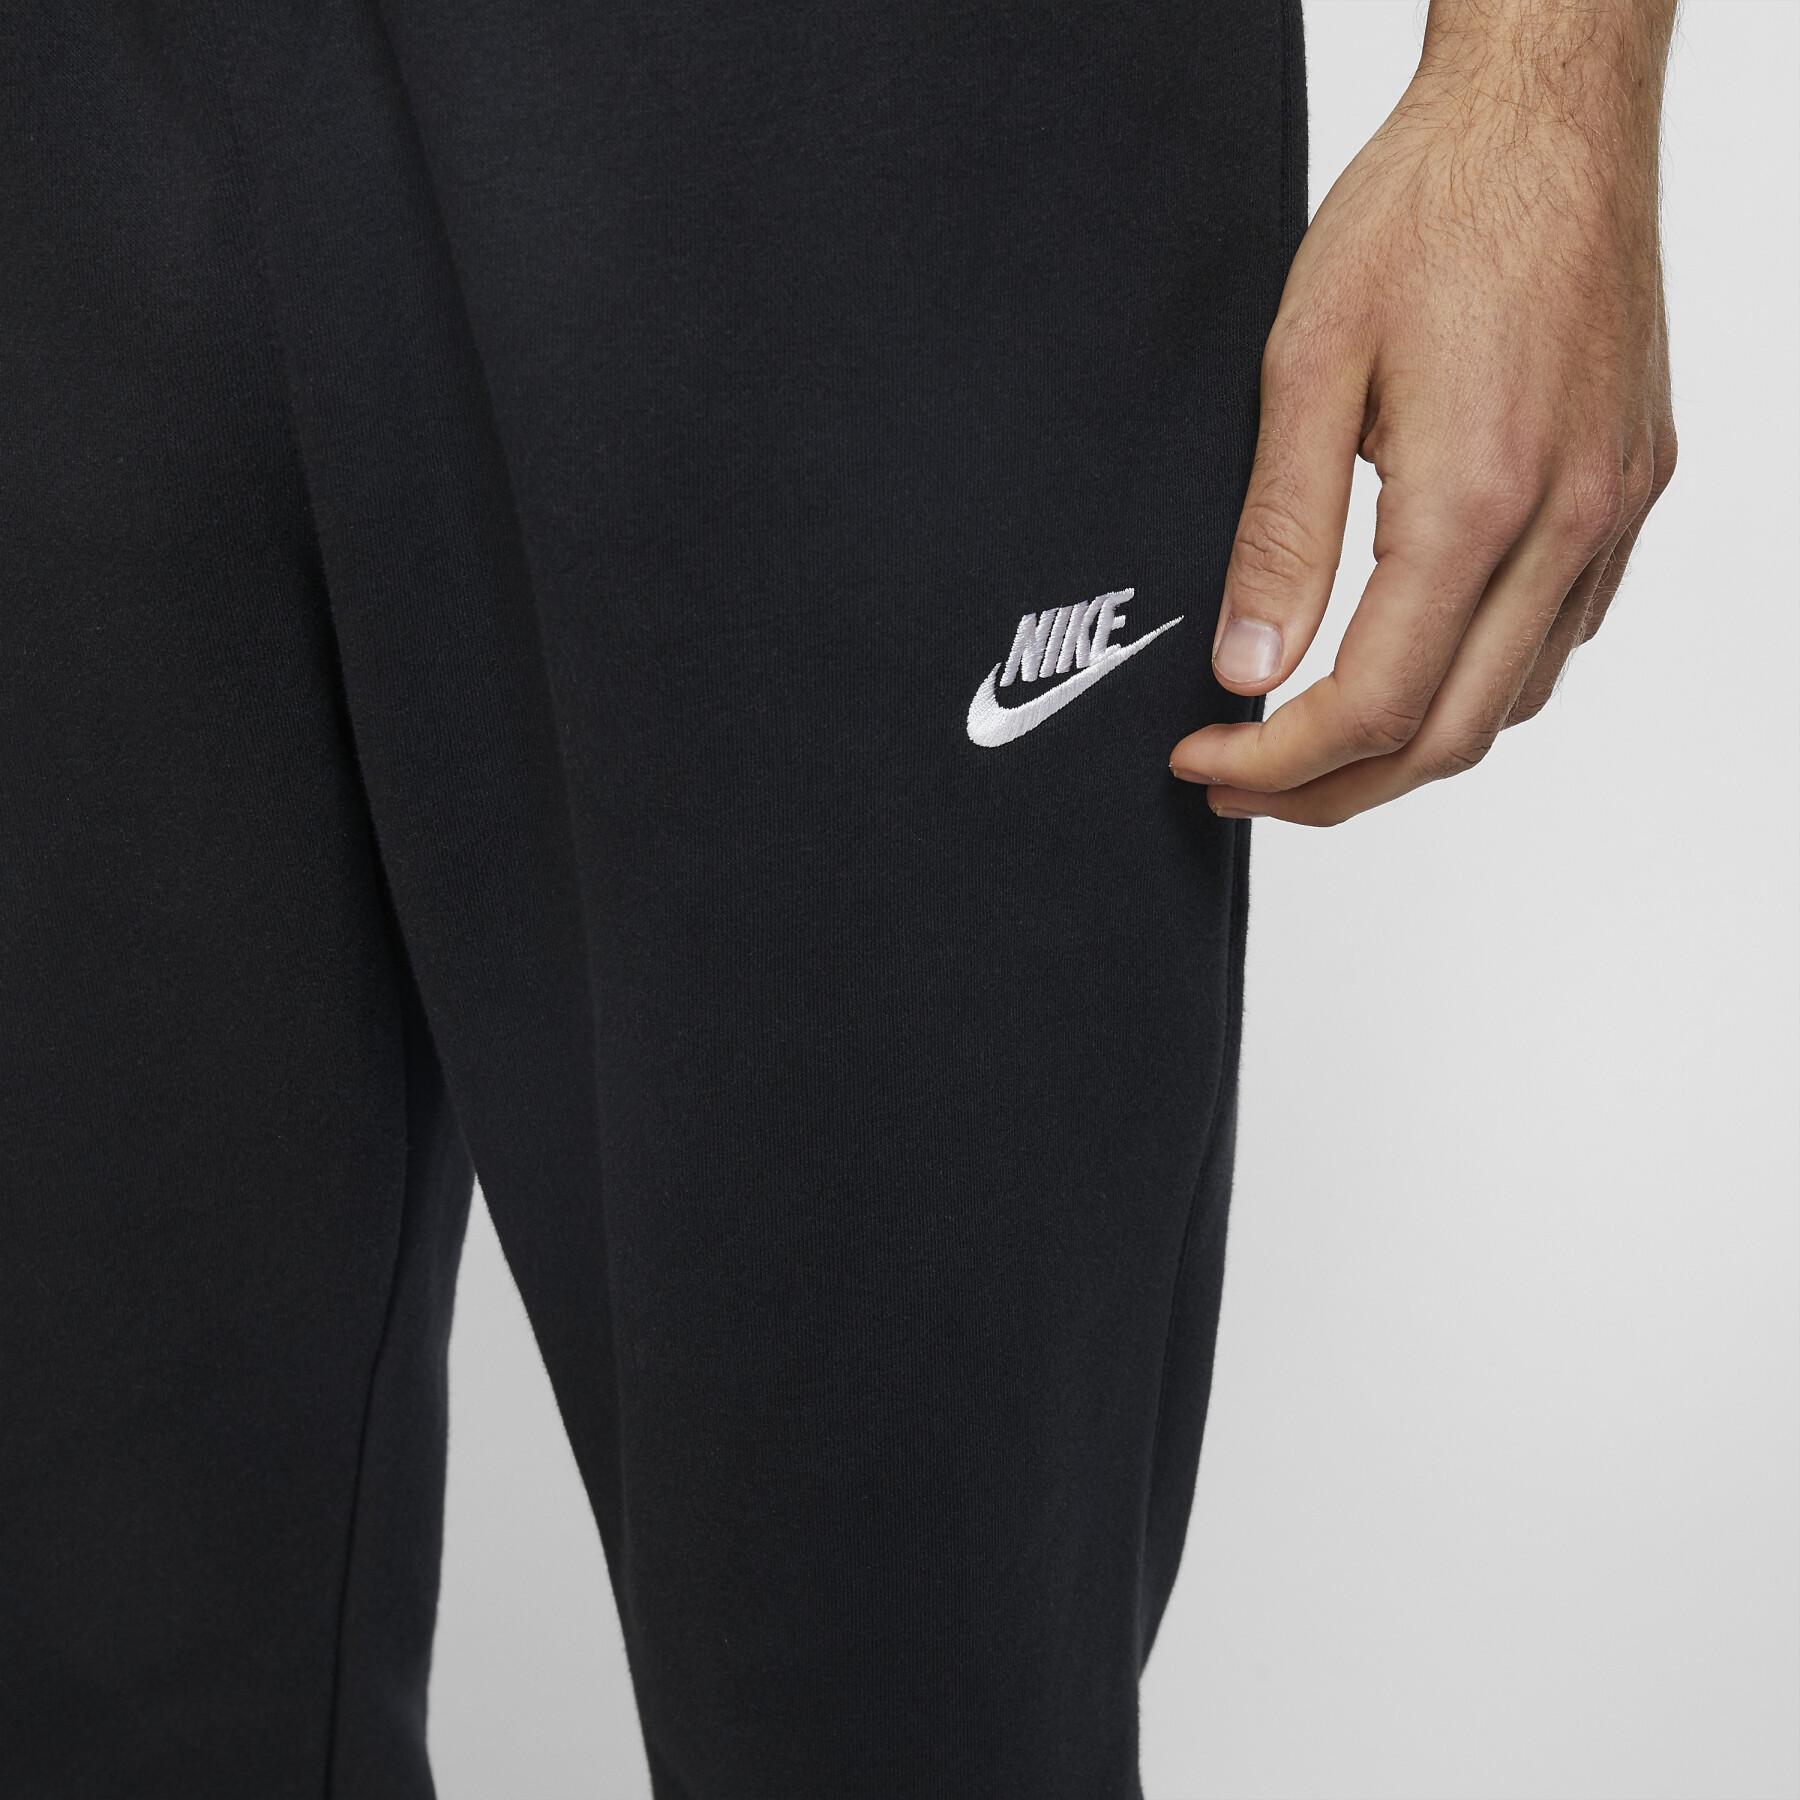 Jogging Nike Sportswear Club Fleece - Nike - Brands - Lifestyle